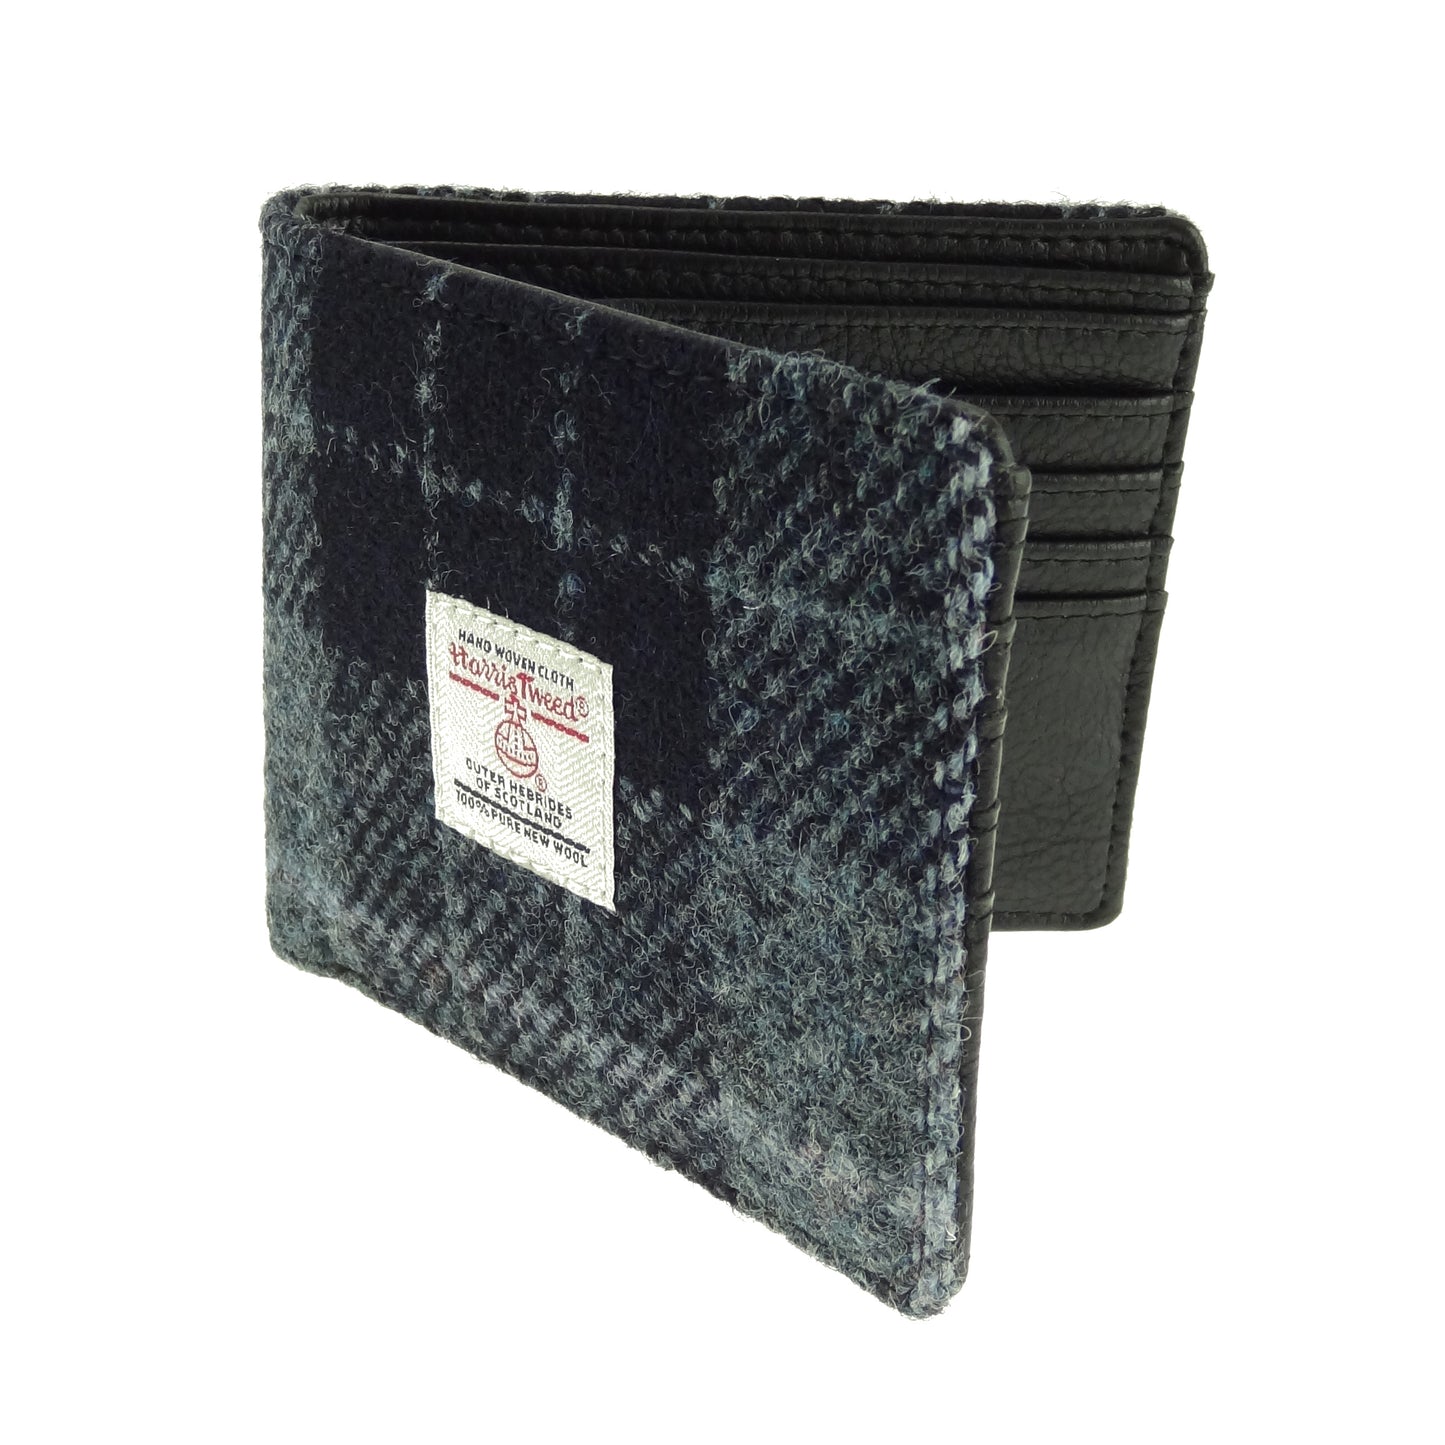 Grey & Black Tartan Wallet